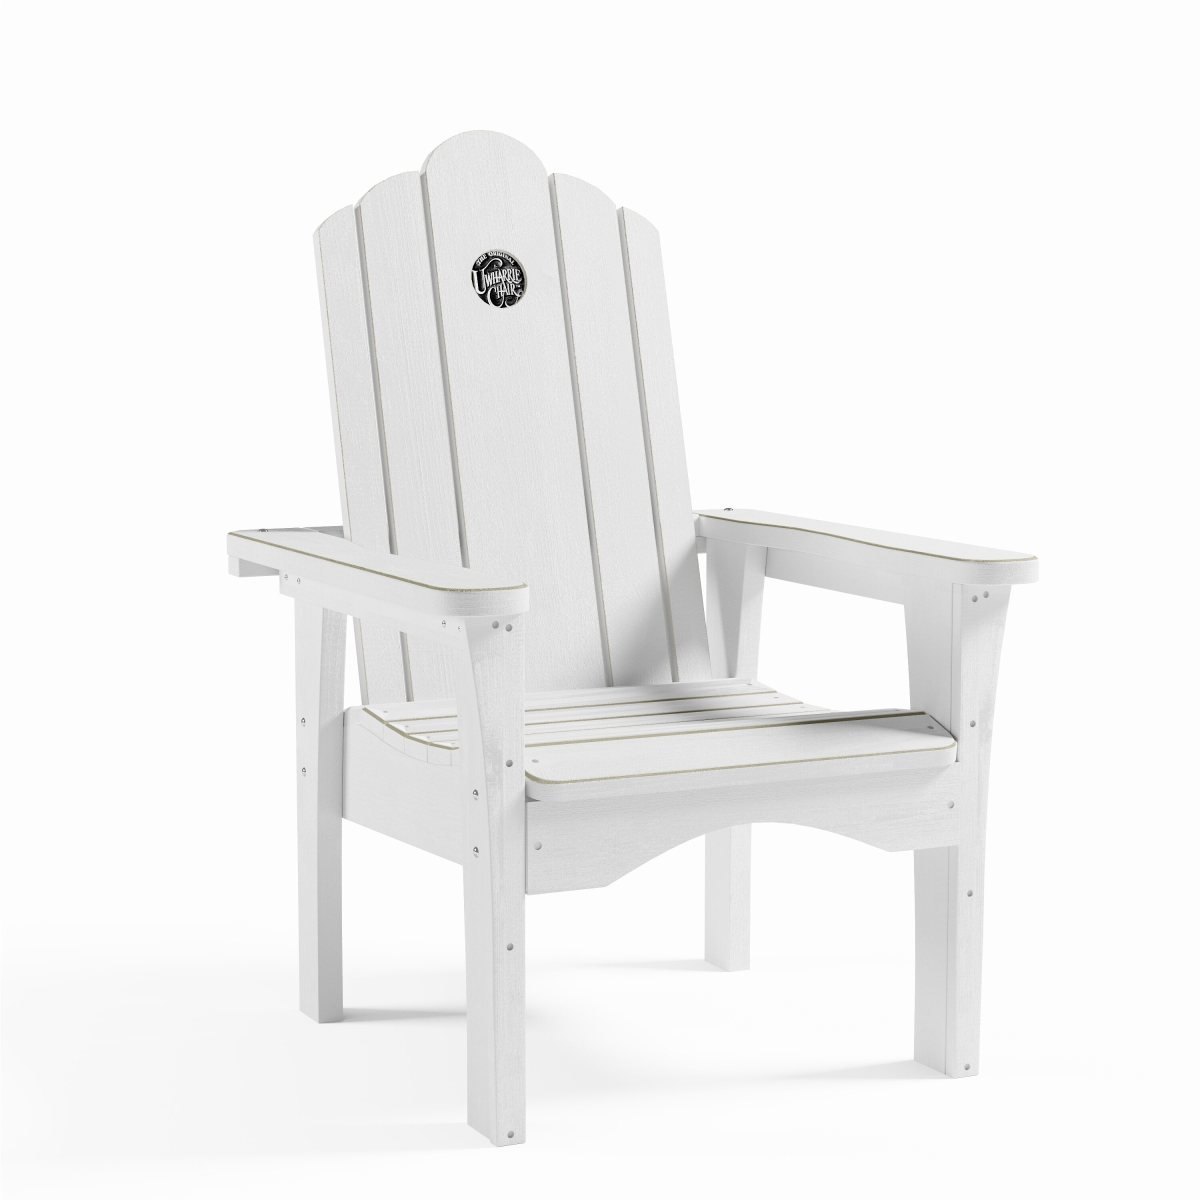 S114-024 Original Wood Lounge Chair, Mint Green Pine - 30.5 X 33.5 X 43.5 In.